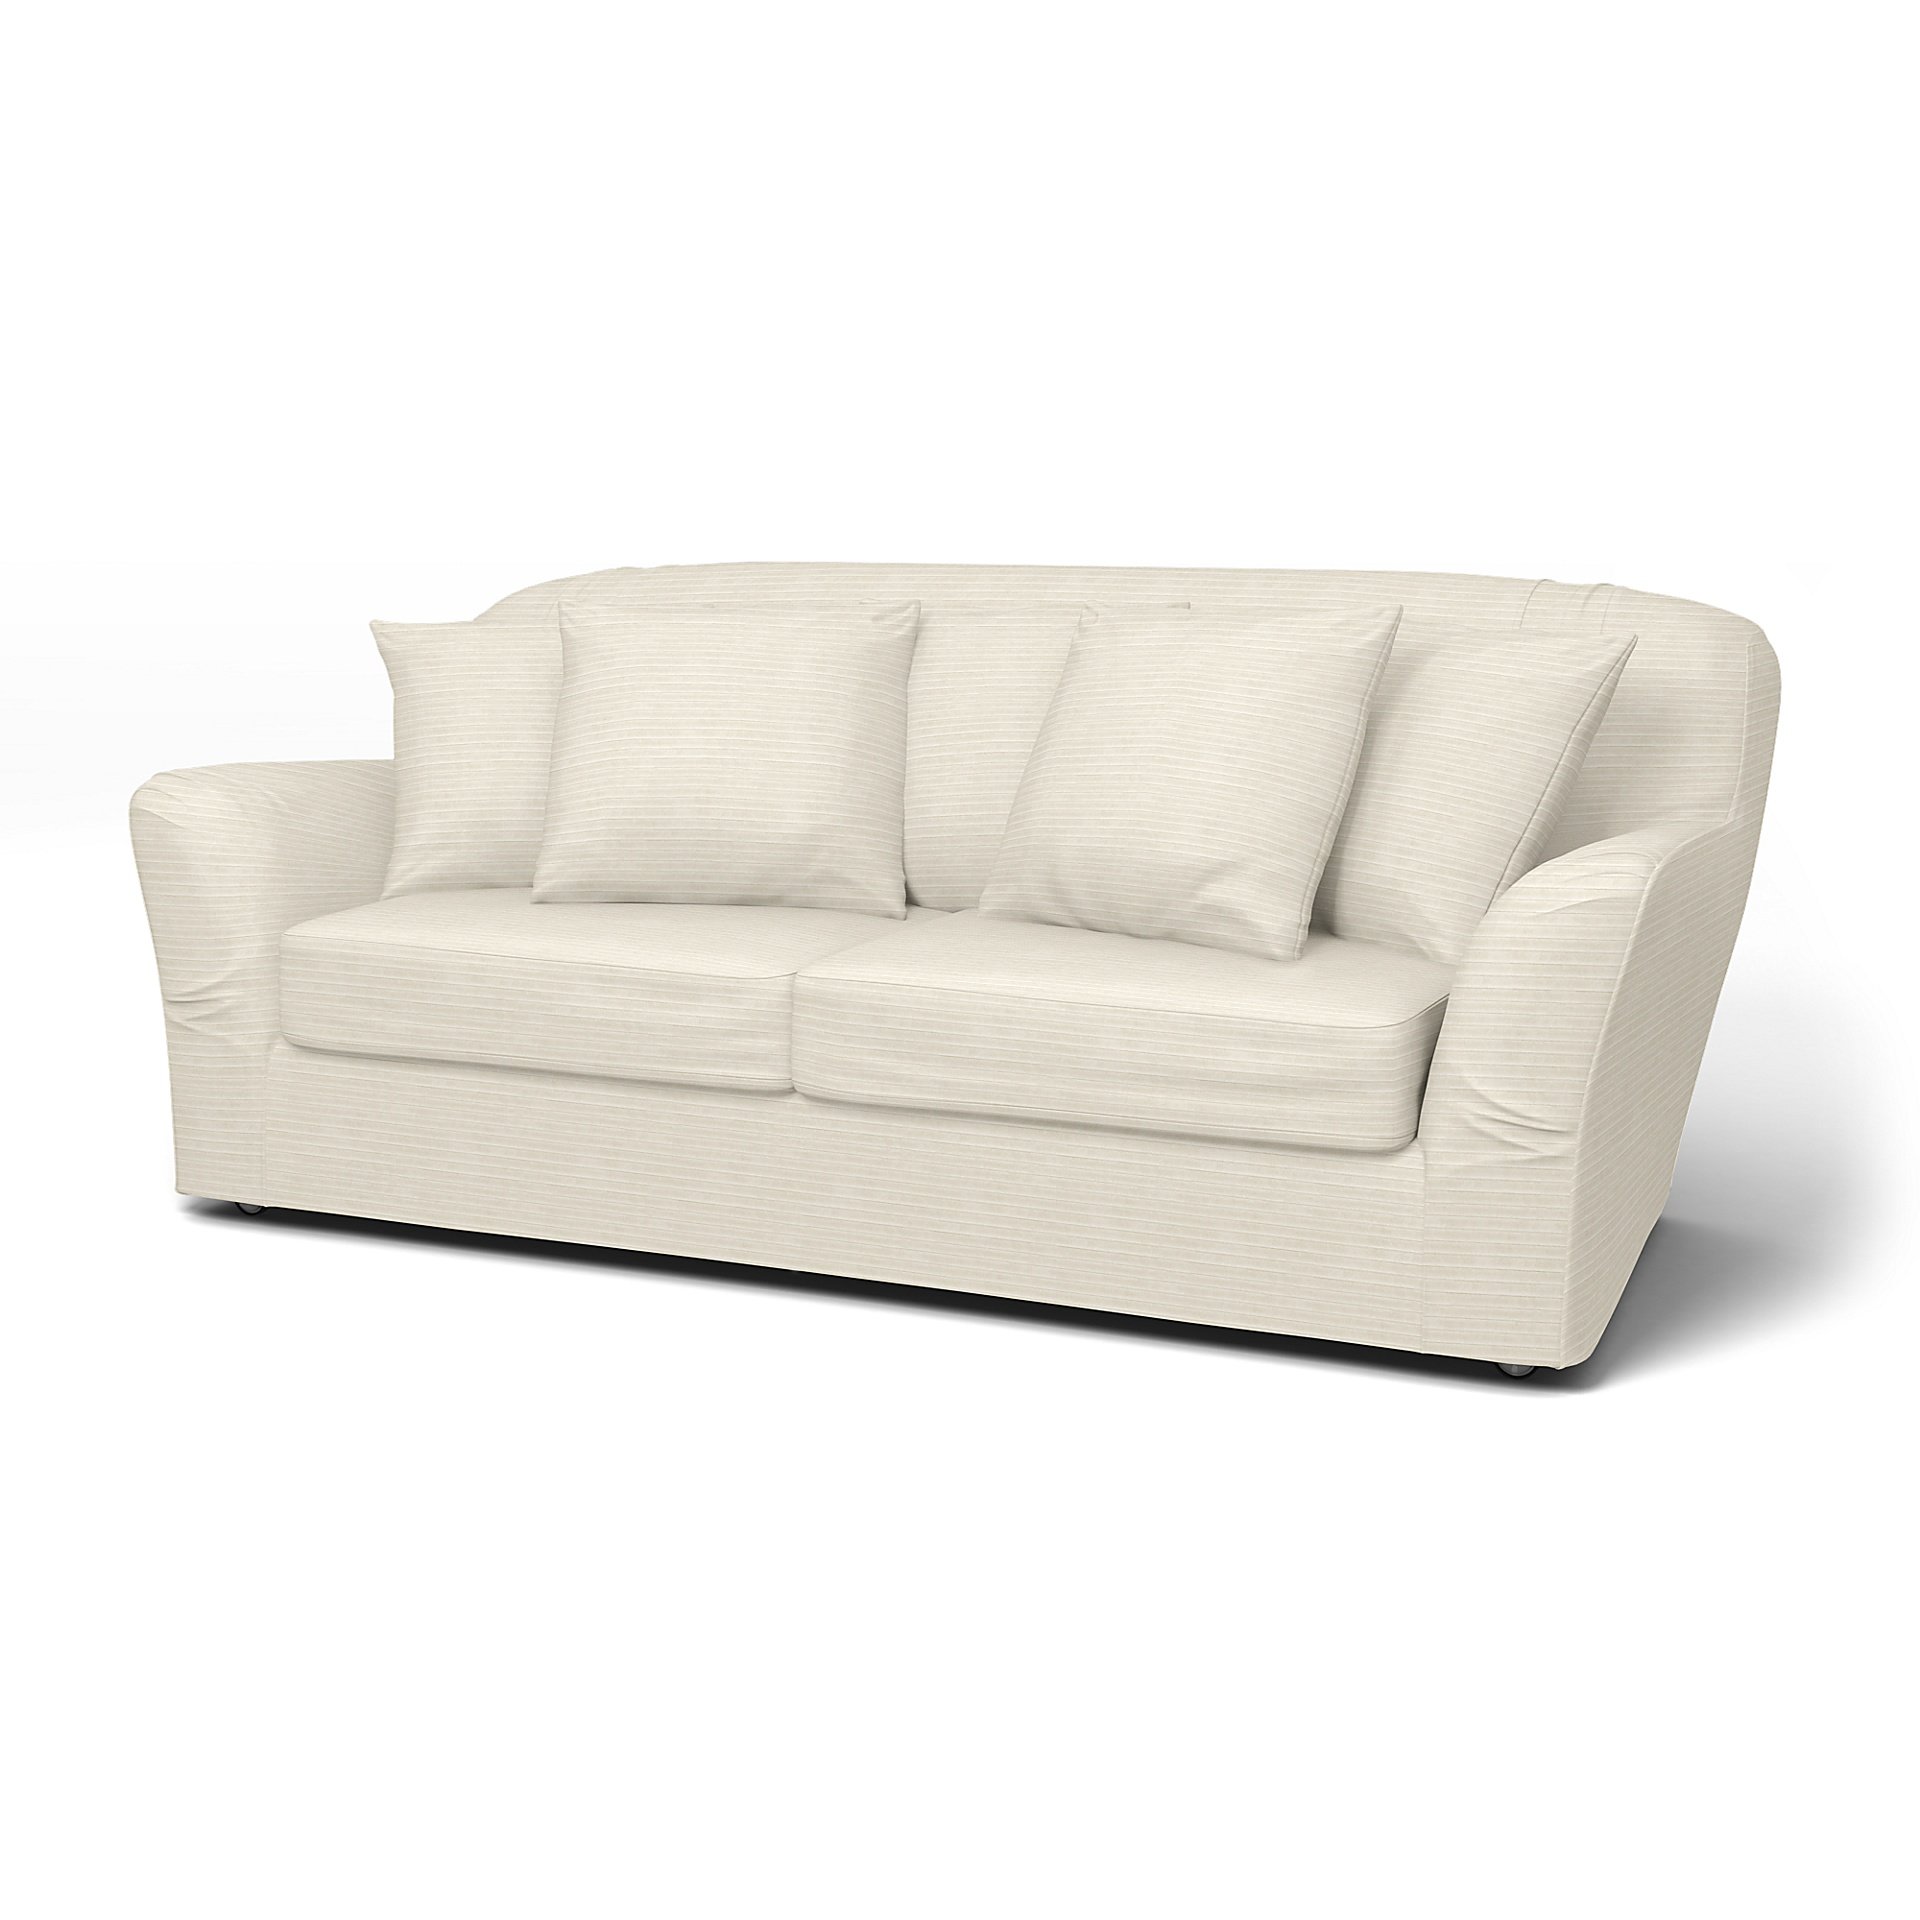 IKEA - Tomelilla sofa bed (Standard model), Tofu, Corduroy - Bemz